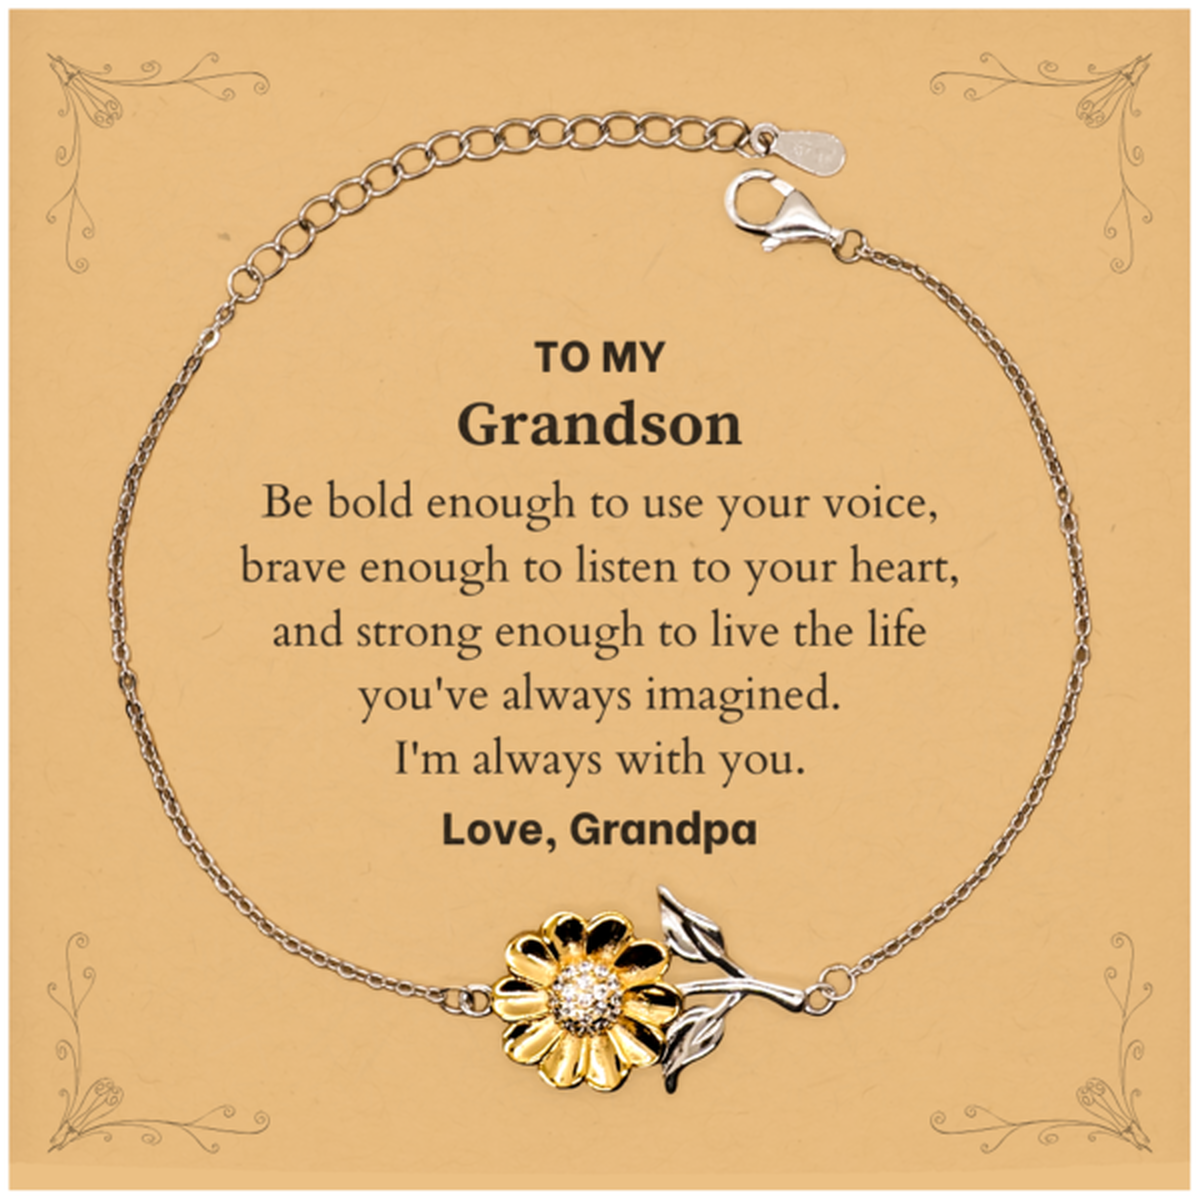 Keepsake Grandson Sunflower Bracelet Gift Idea Graduation Christmas Birthday Grandson from Grandpa, Grandson Be bold enough to use your voice, brave enough to listen to your heart. Love, Grandpa